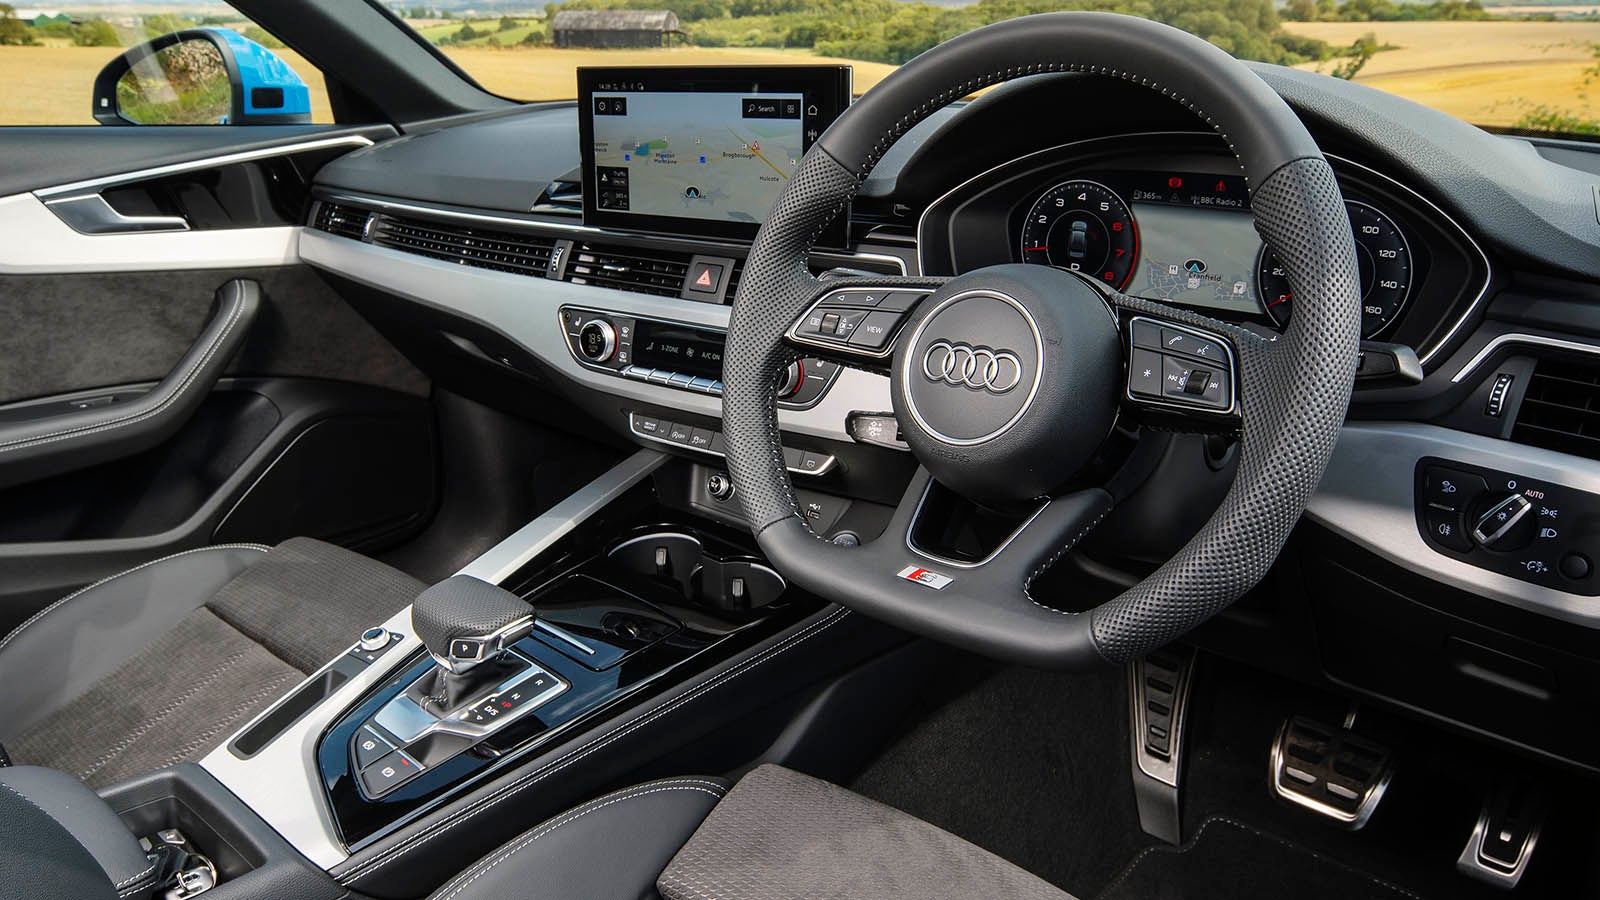 Audi A4 review interior